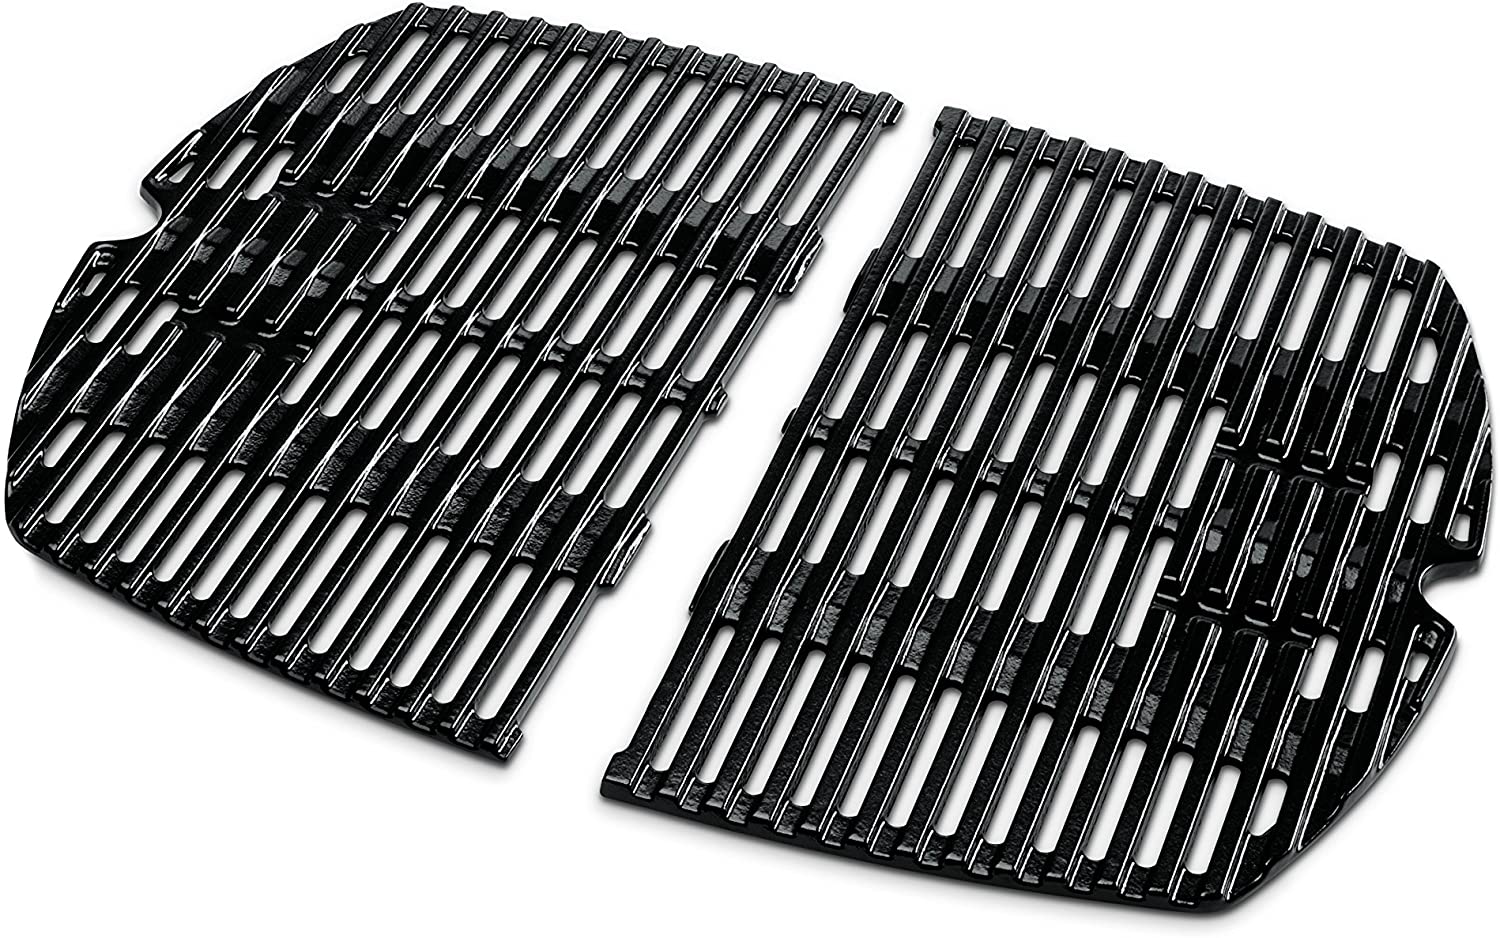 Weber Grillrost Q 2000/200 series, black, 38.86x 1.27 x 54.61 cm, 7645